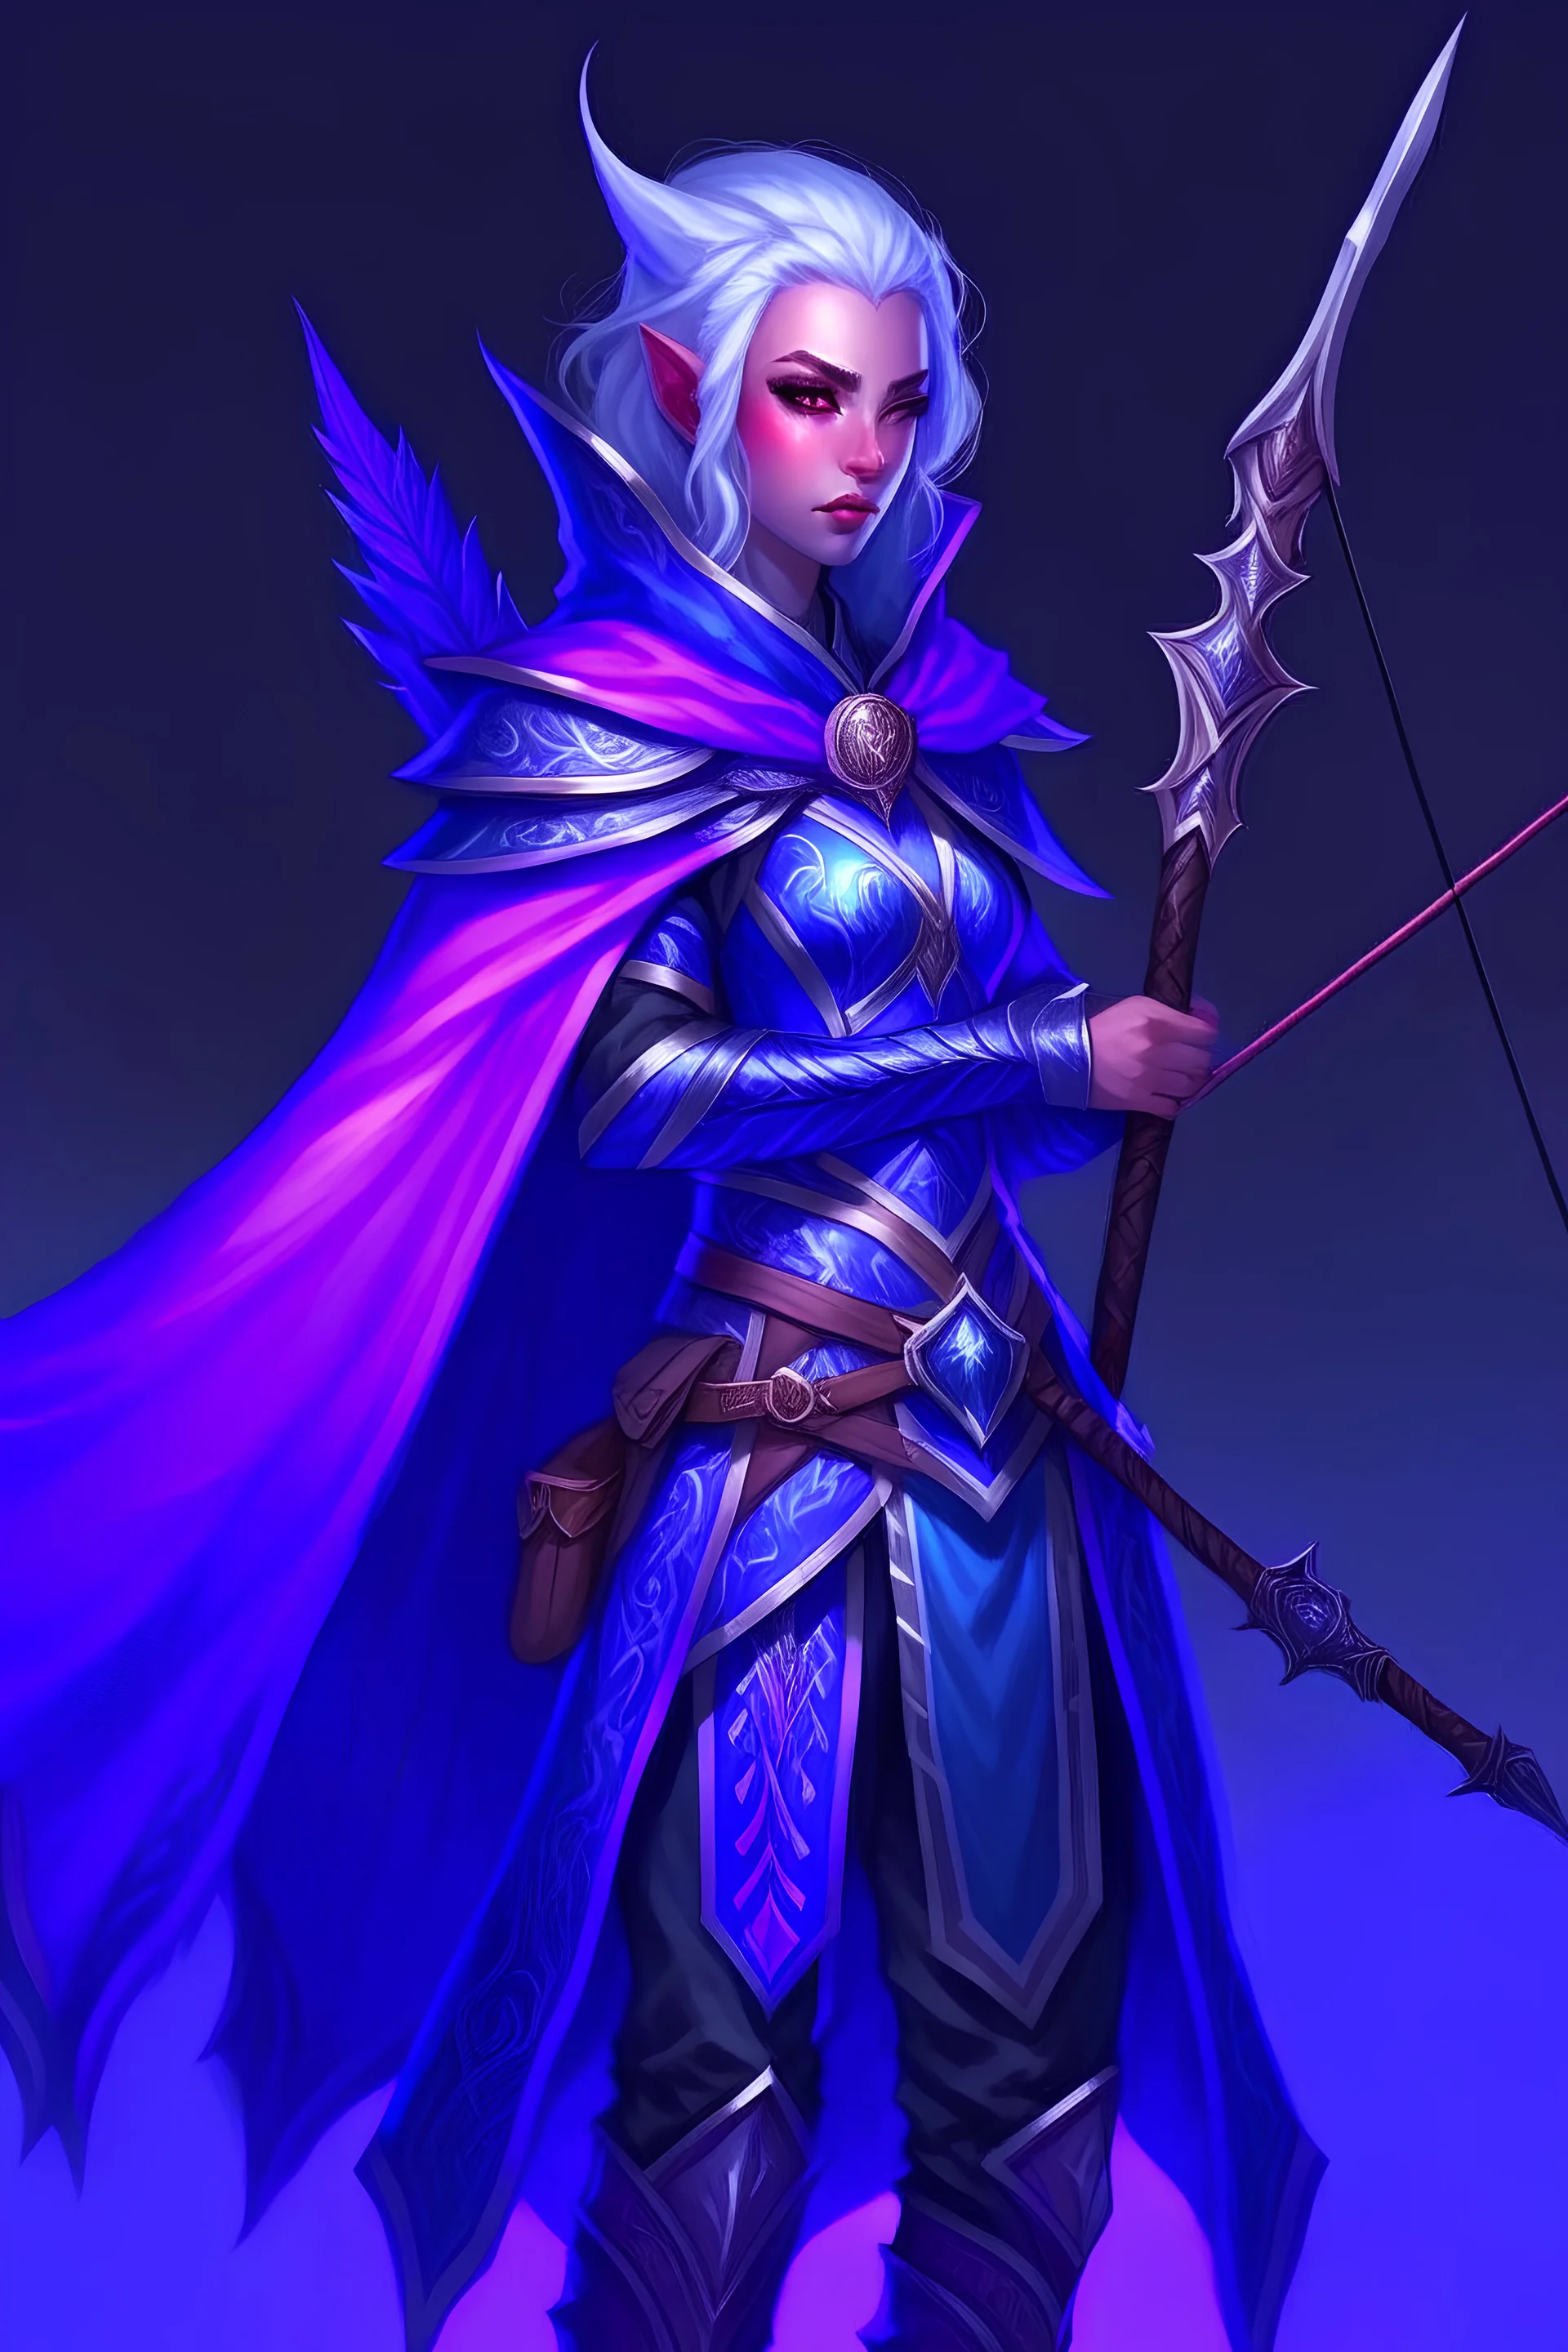 rogue moon elf, decorative cloak, blue skin, silver hair, purple eyes, amulet, blue fire, light ornate armor, long bow